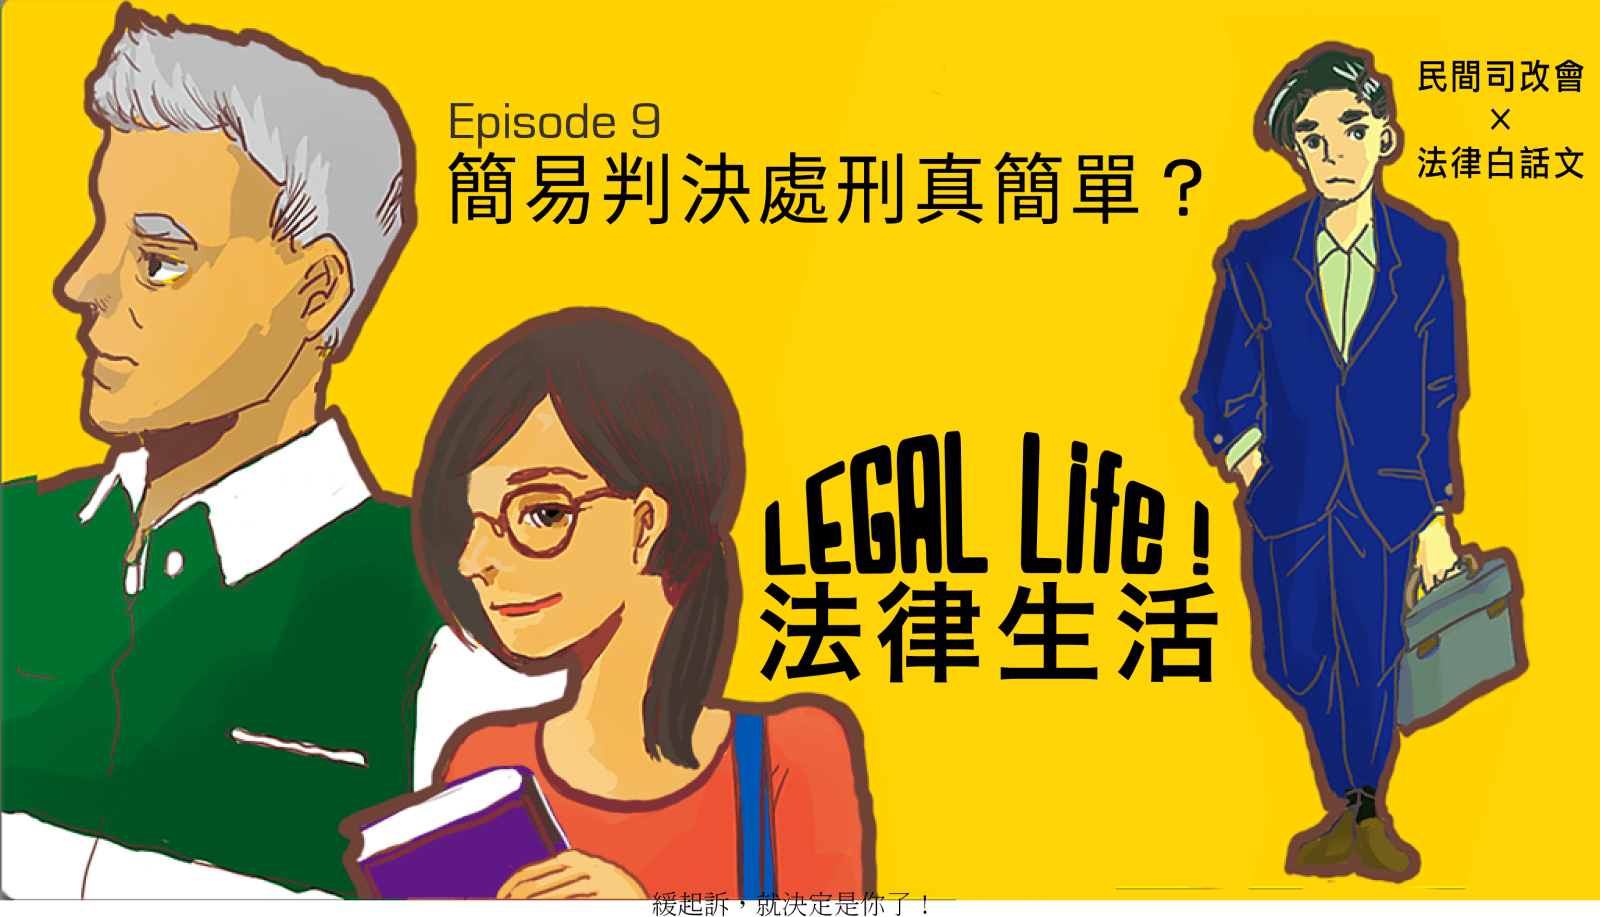 2016/07/legal-life9.png